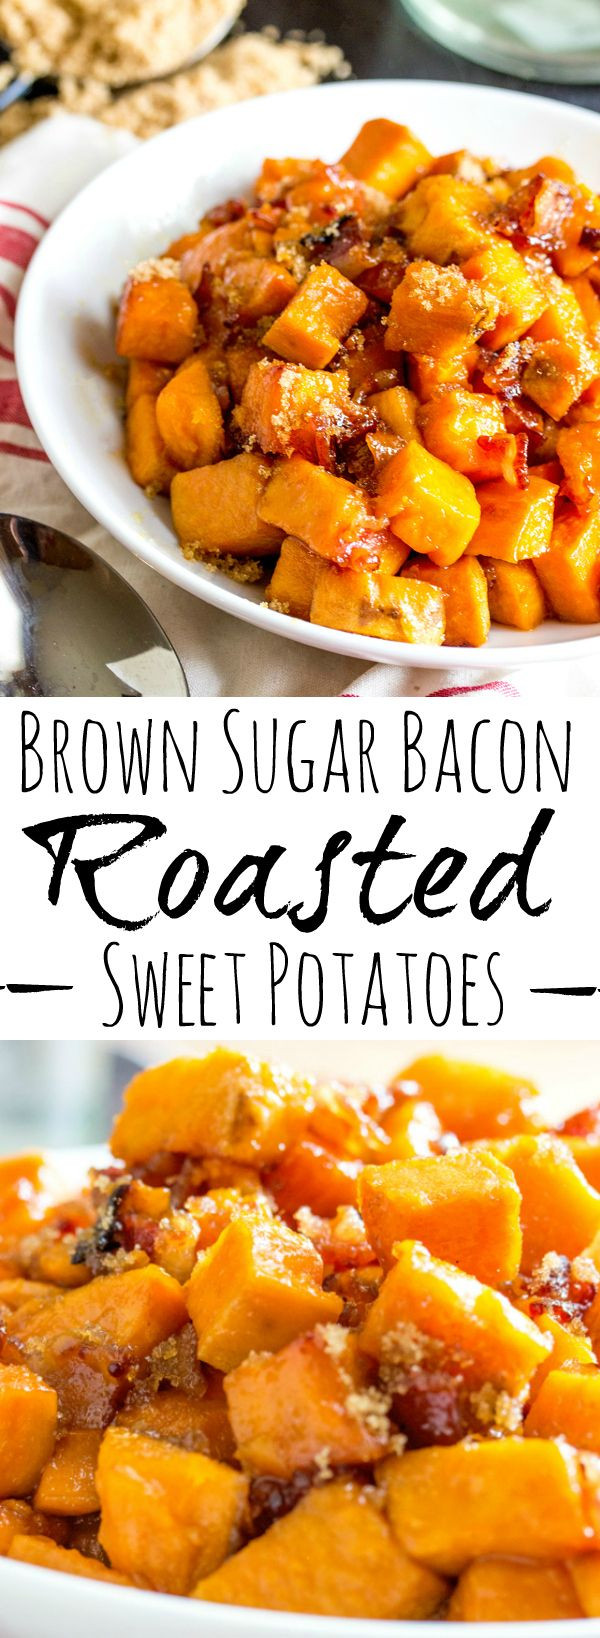 Sweet Potato Recipes For Thanksgiving
 Brown Sugar Bacon Roasted Sweet Potatoes